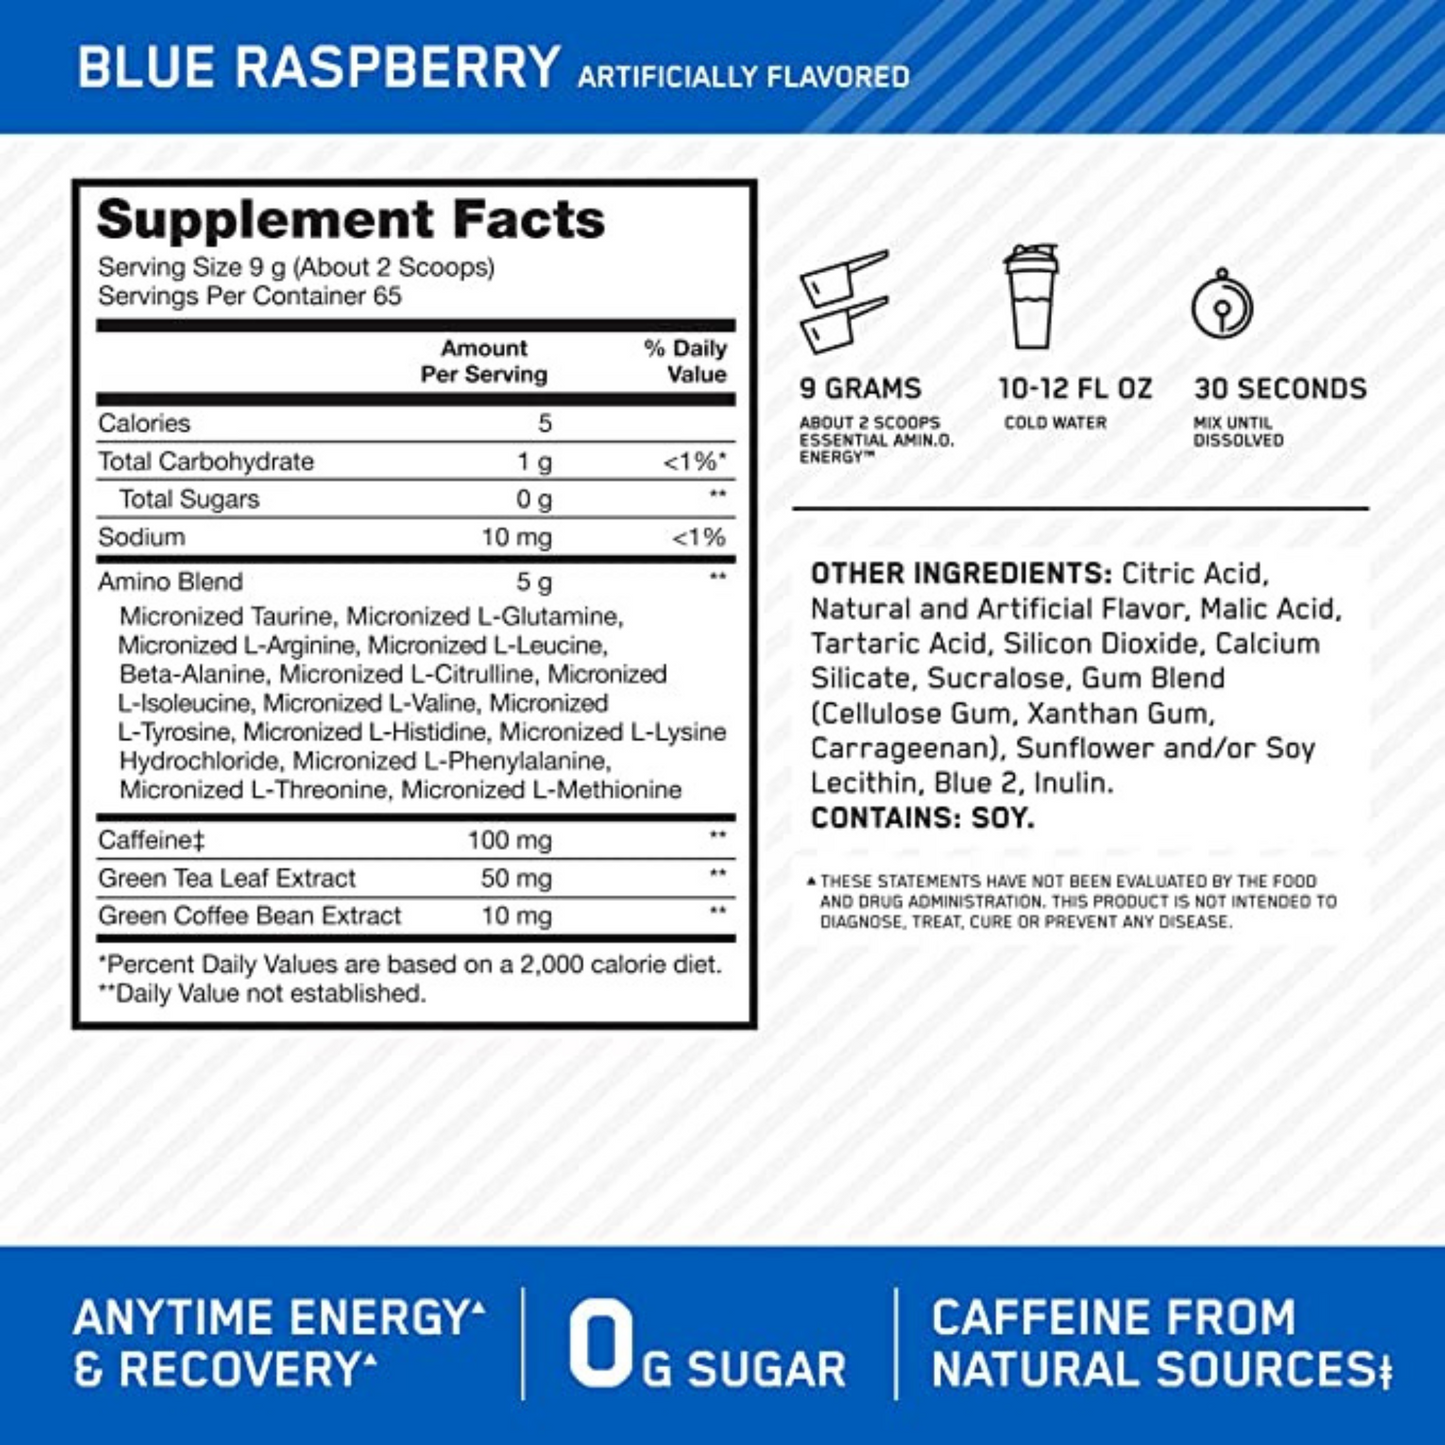 Optimum Nutrition Amino Energy | Blue Raspberry 65 Servings